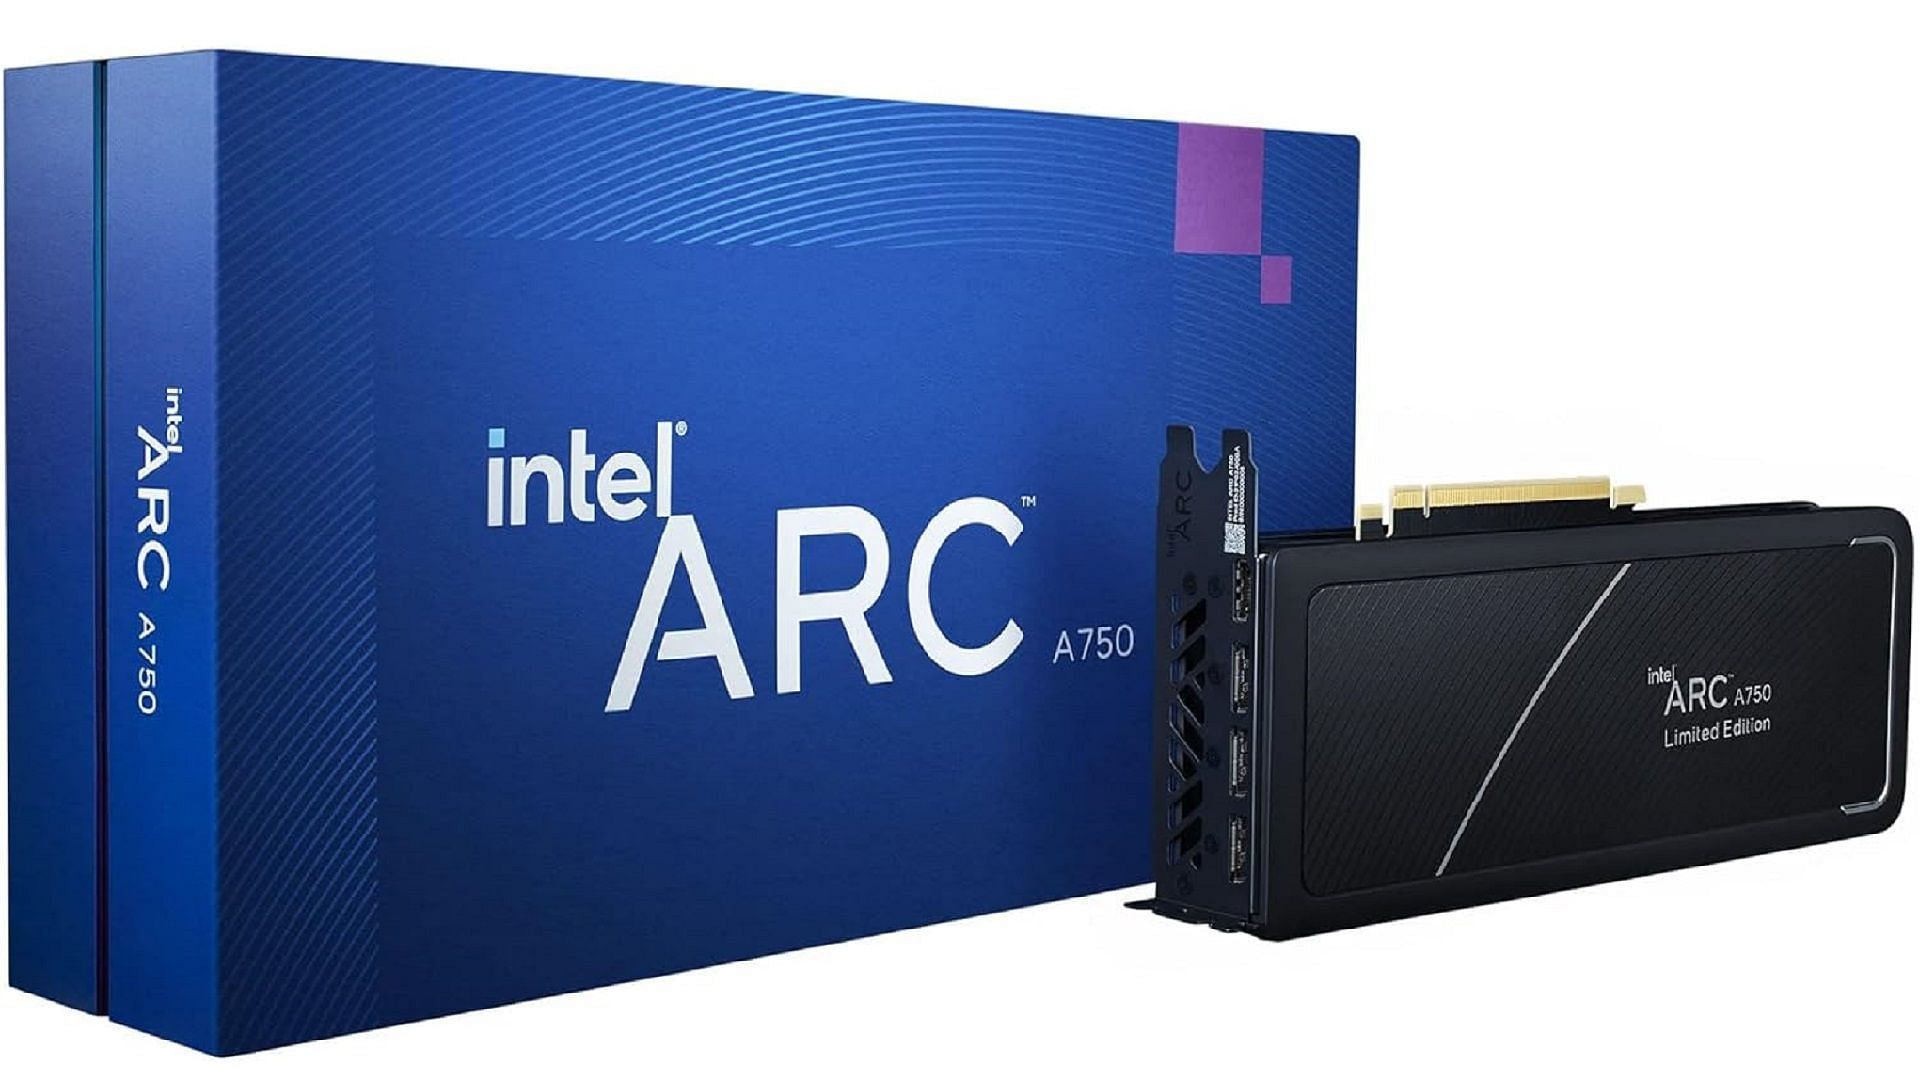 Intel Arc A750 Limited Edition 8GB Graphics Card (Image via Intel)